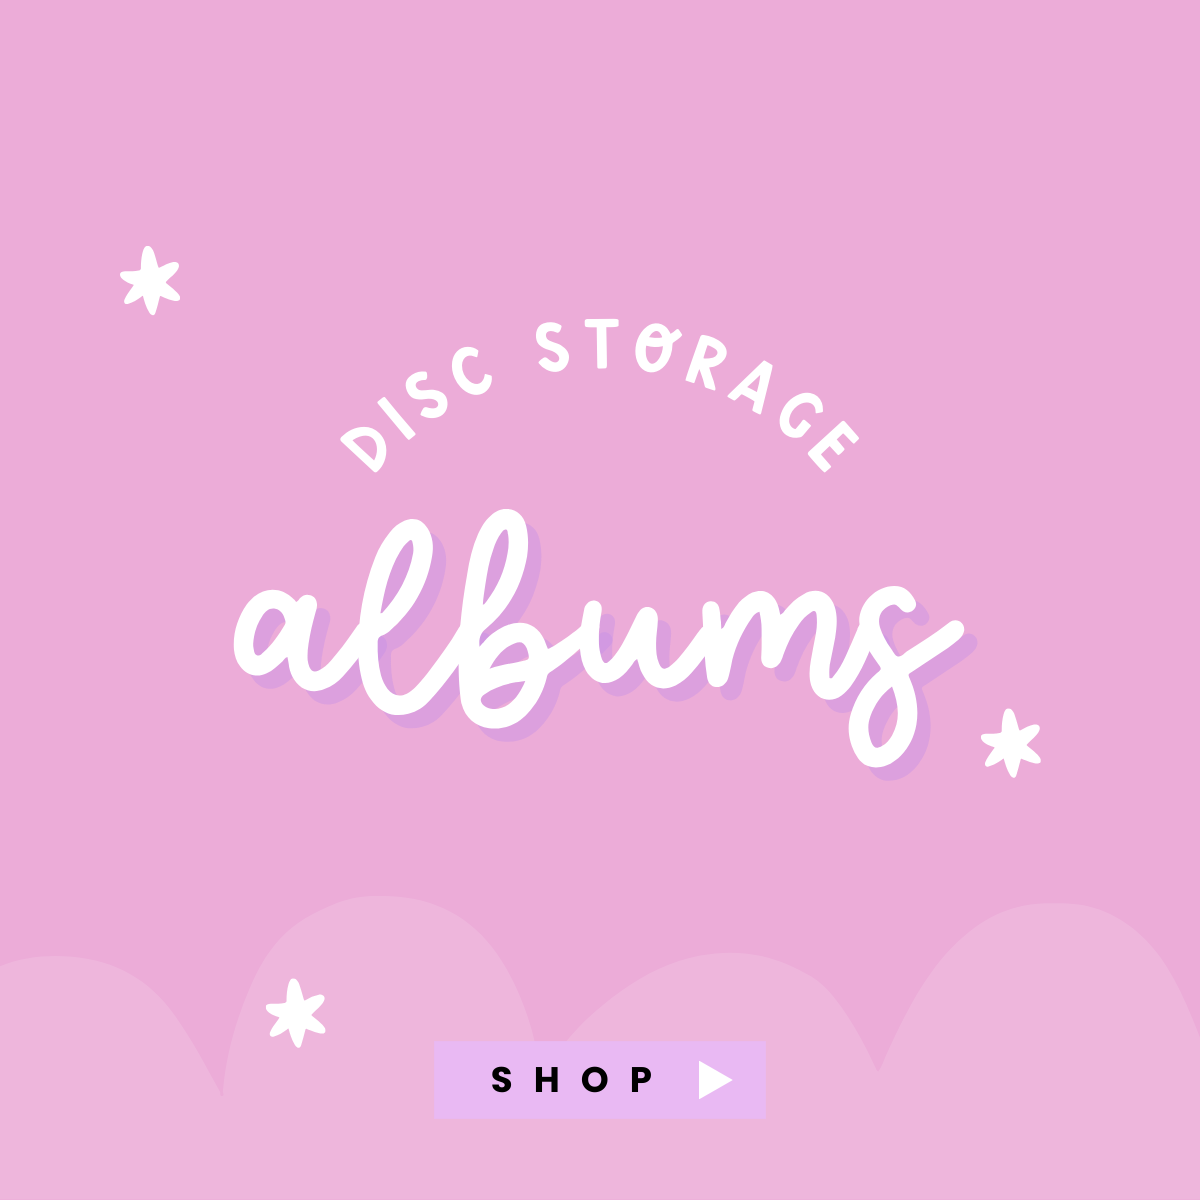 Disc Storage Albums